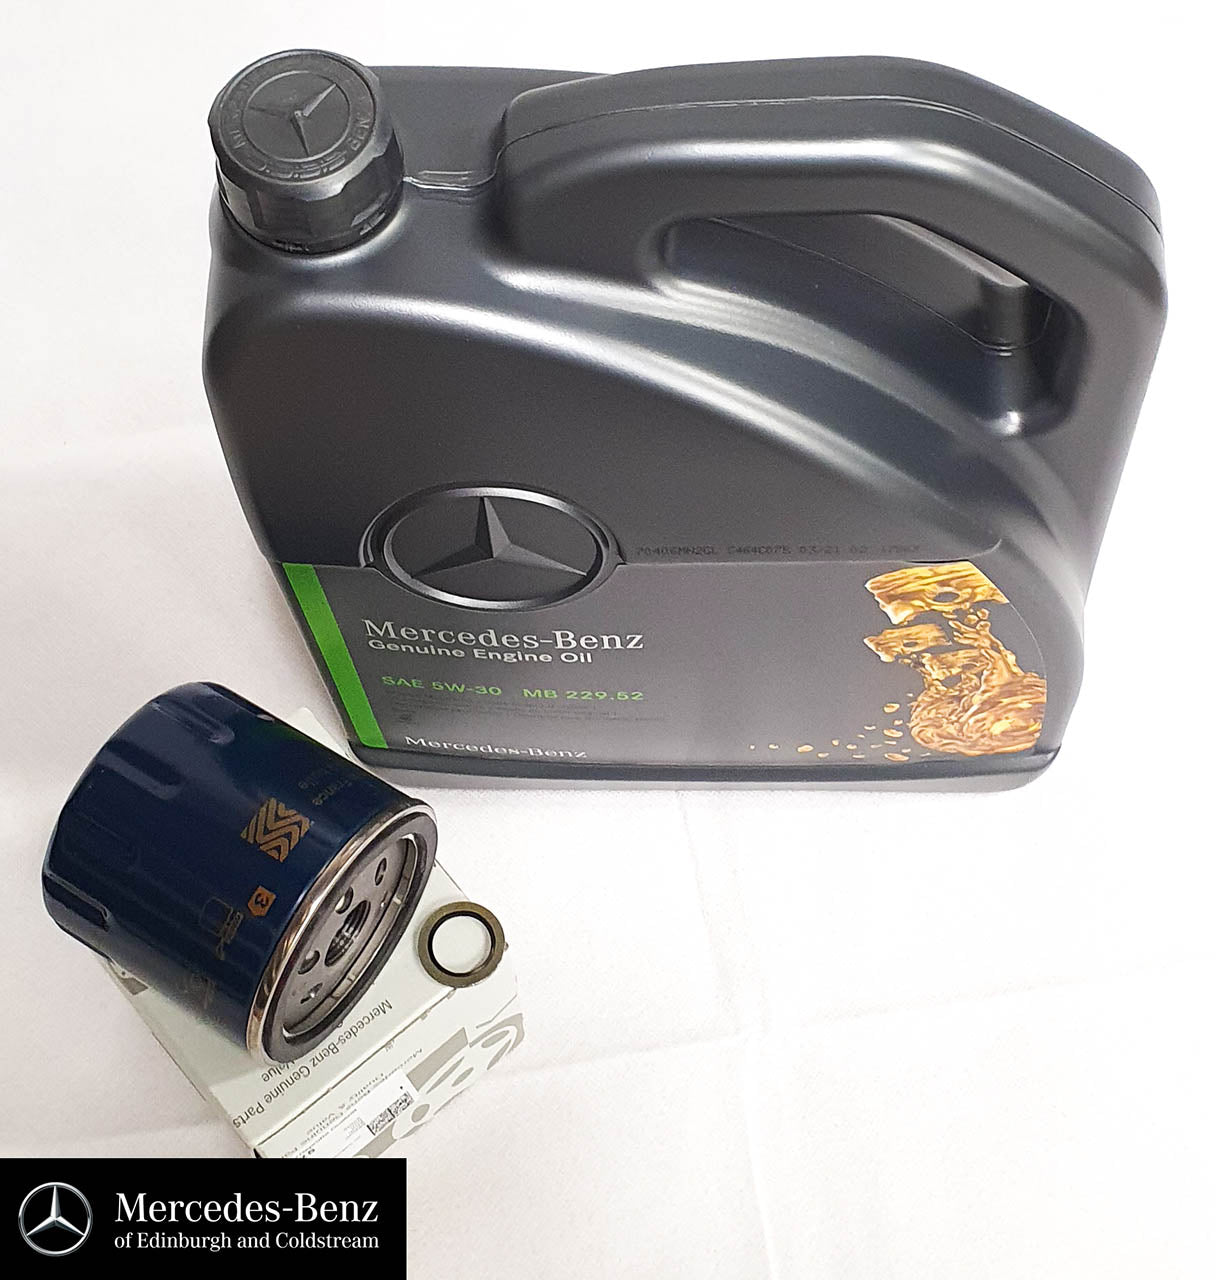 Genuine Mercedes-Benz service kit CDI diesel OM607 engine - oil and filter